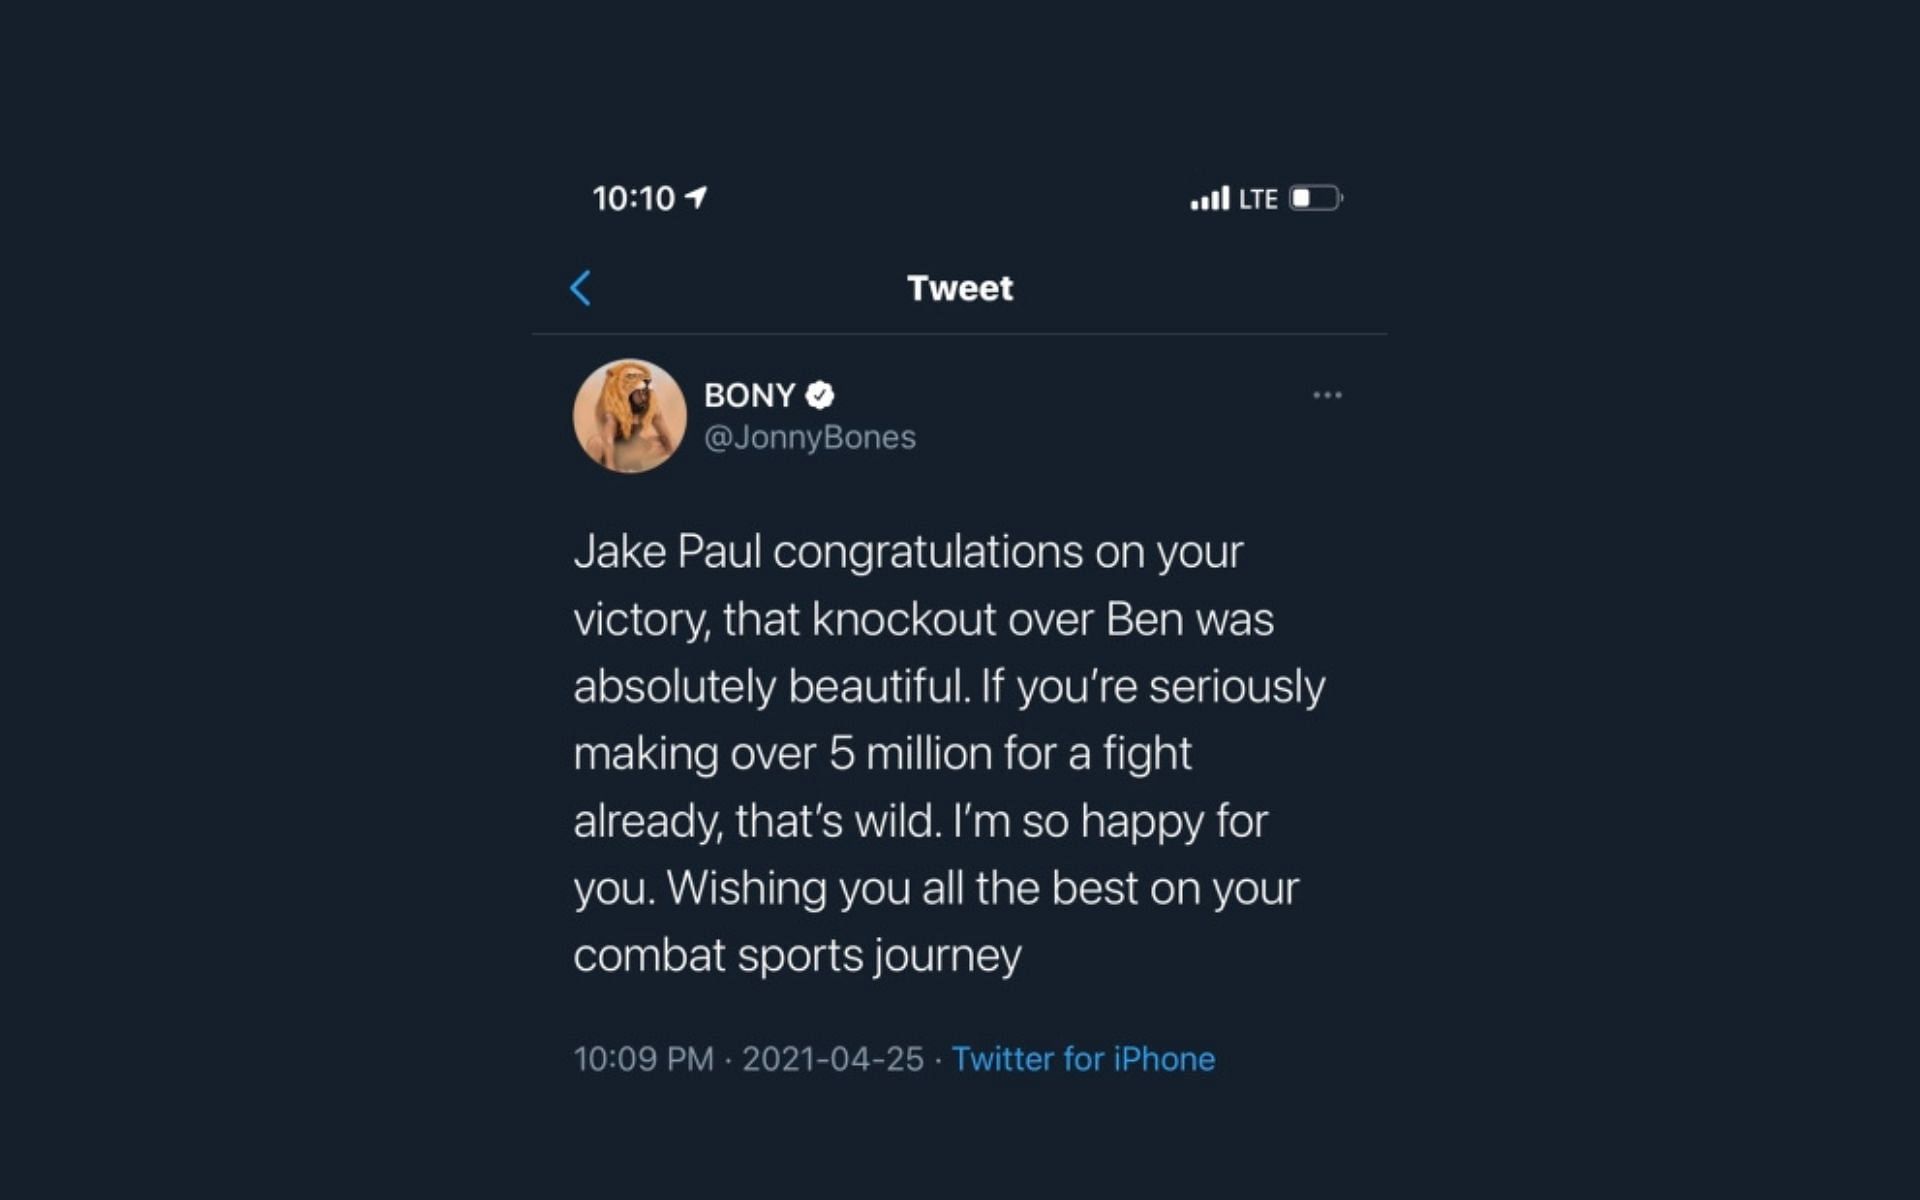 Jones praises Paul [Credits: @JonnyBones on Twitter]